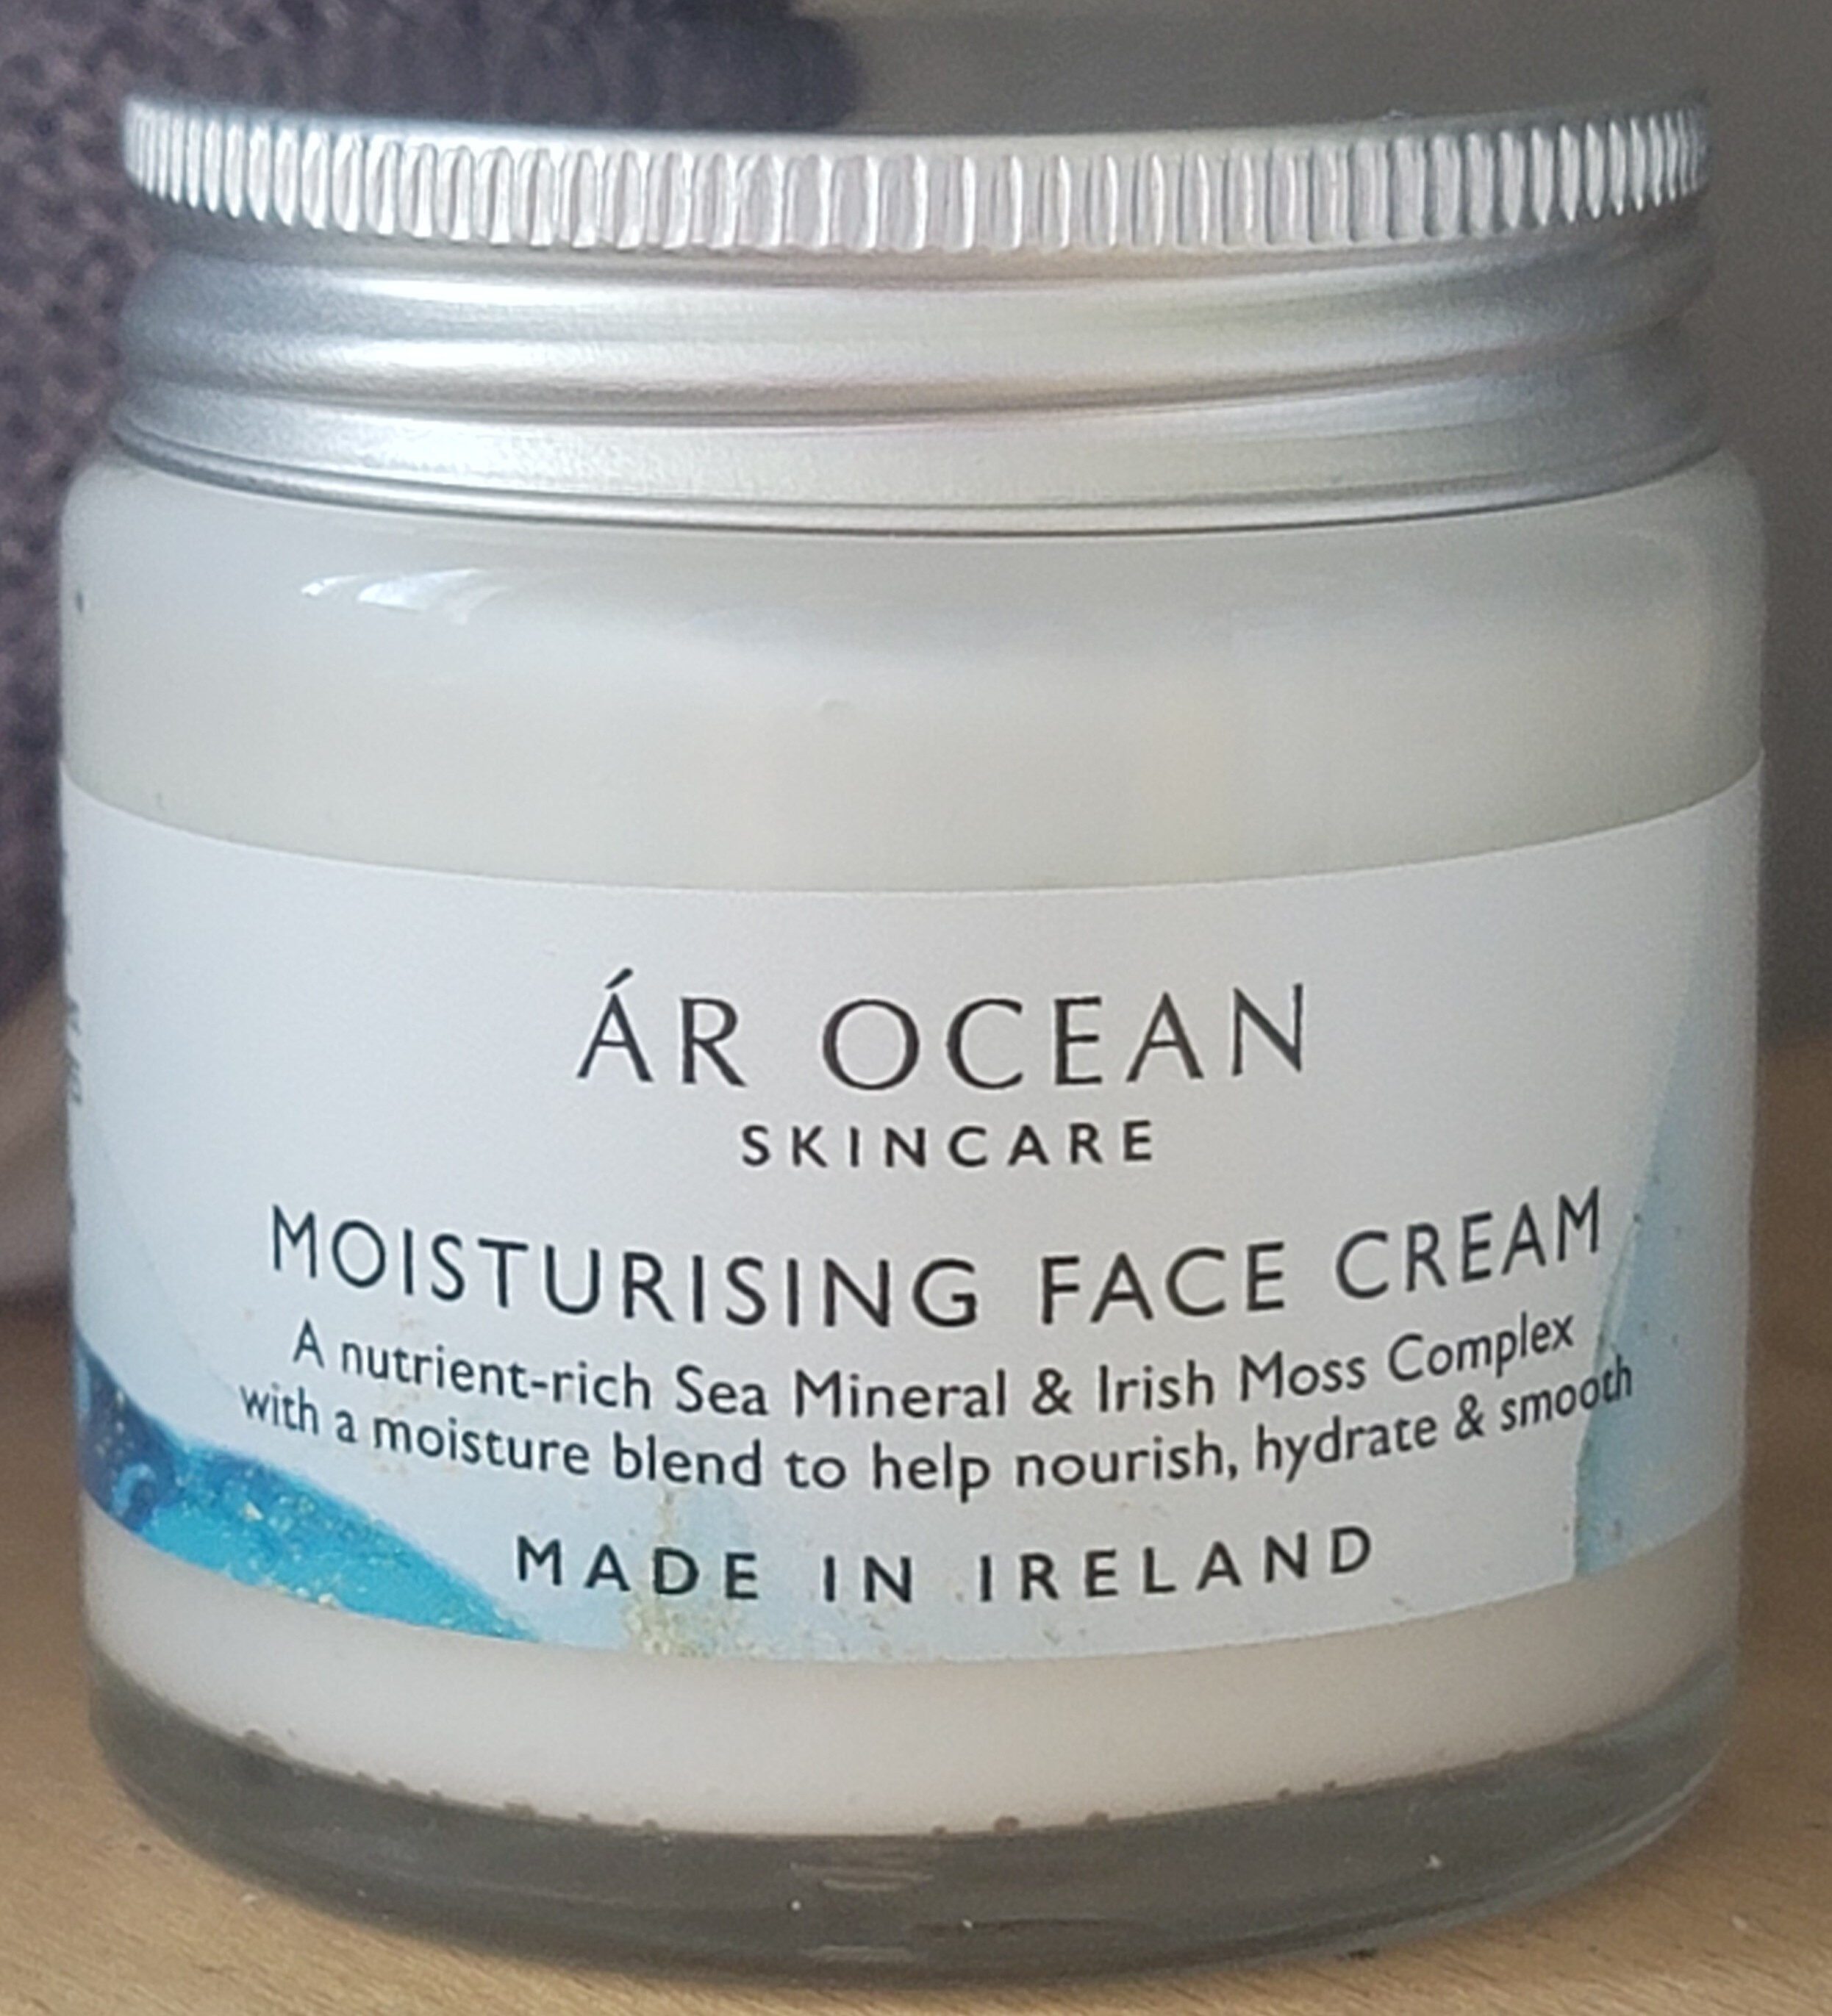 Moisturising Face Cream - Product - en